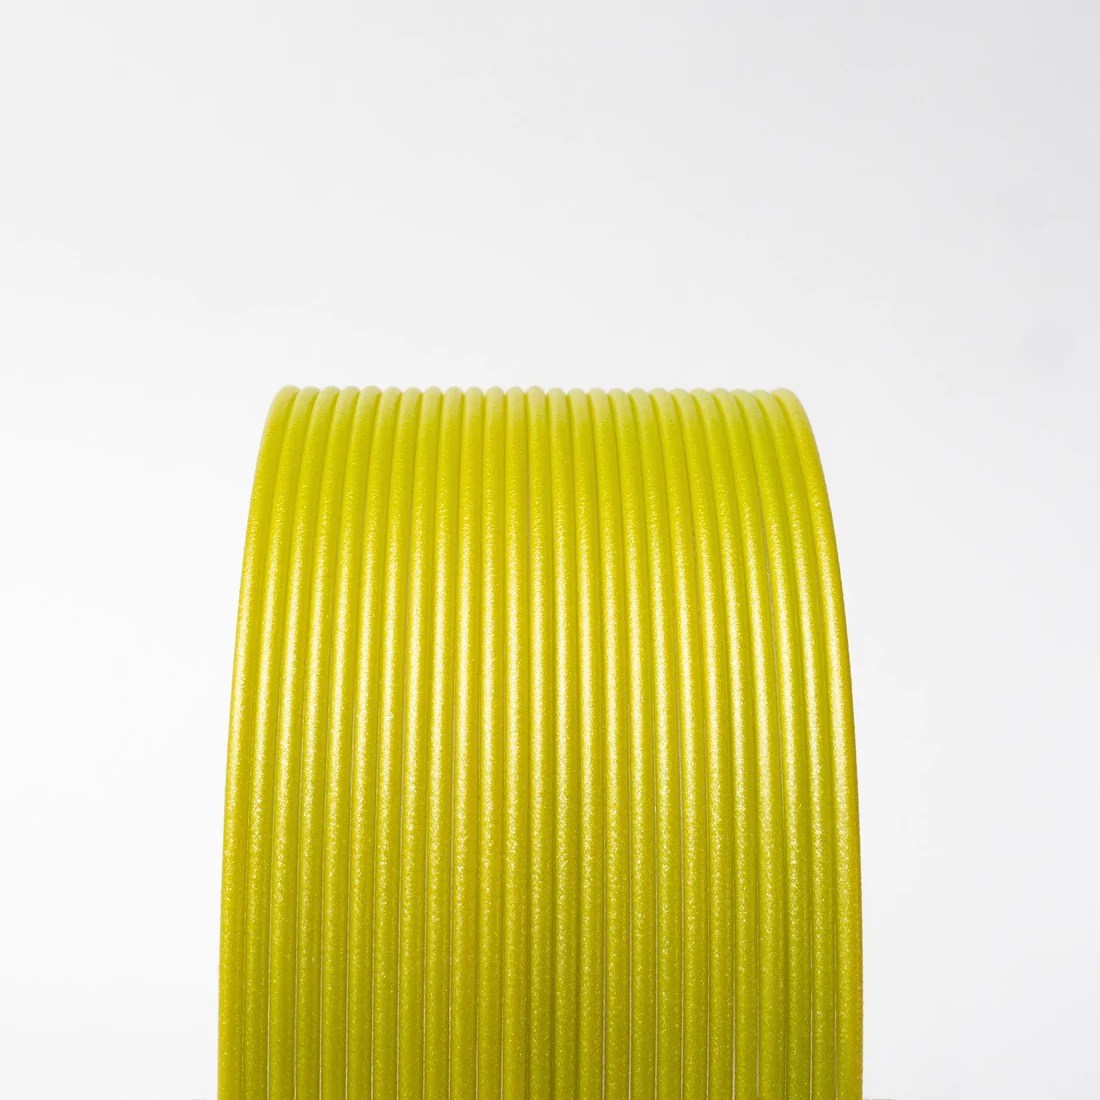 Lulz Metallic Green HTPLA  Proto-pasta 1.75mm 500gms 3D printing filament